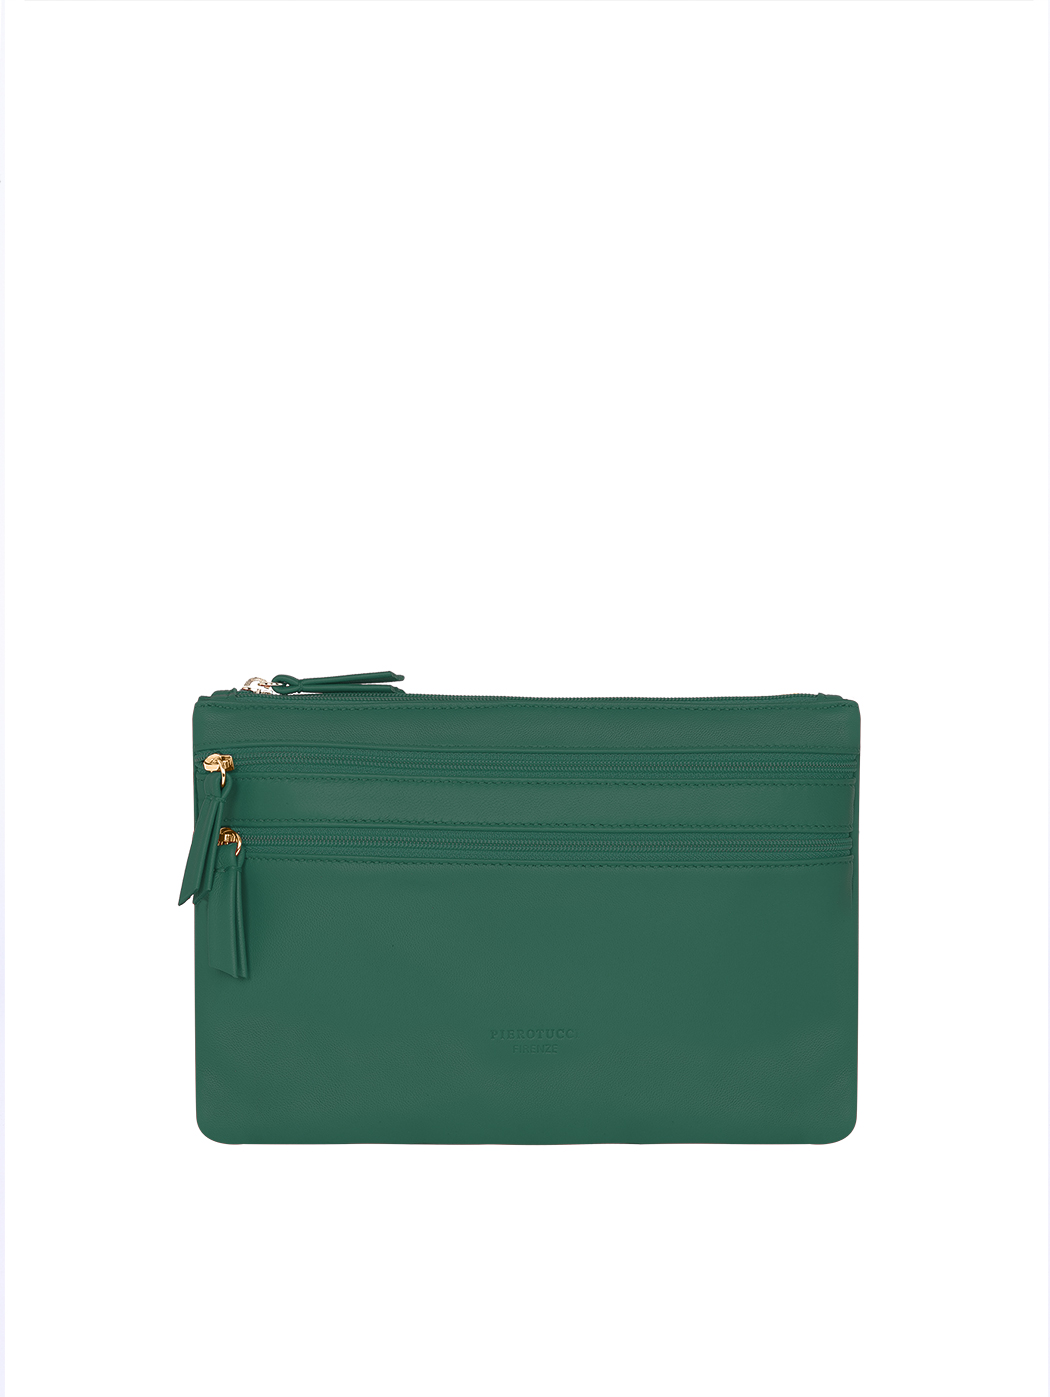 Green Convertible Crossbody Clutch Bag